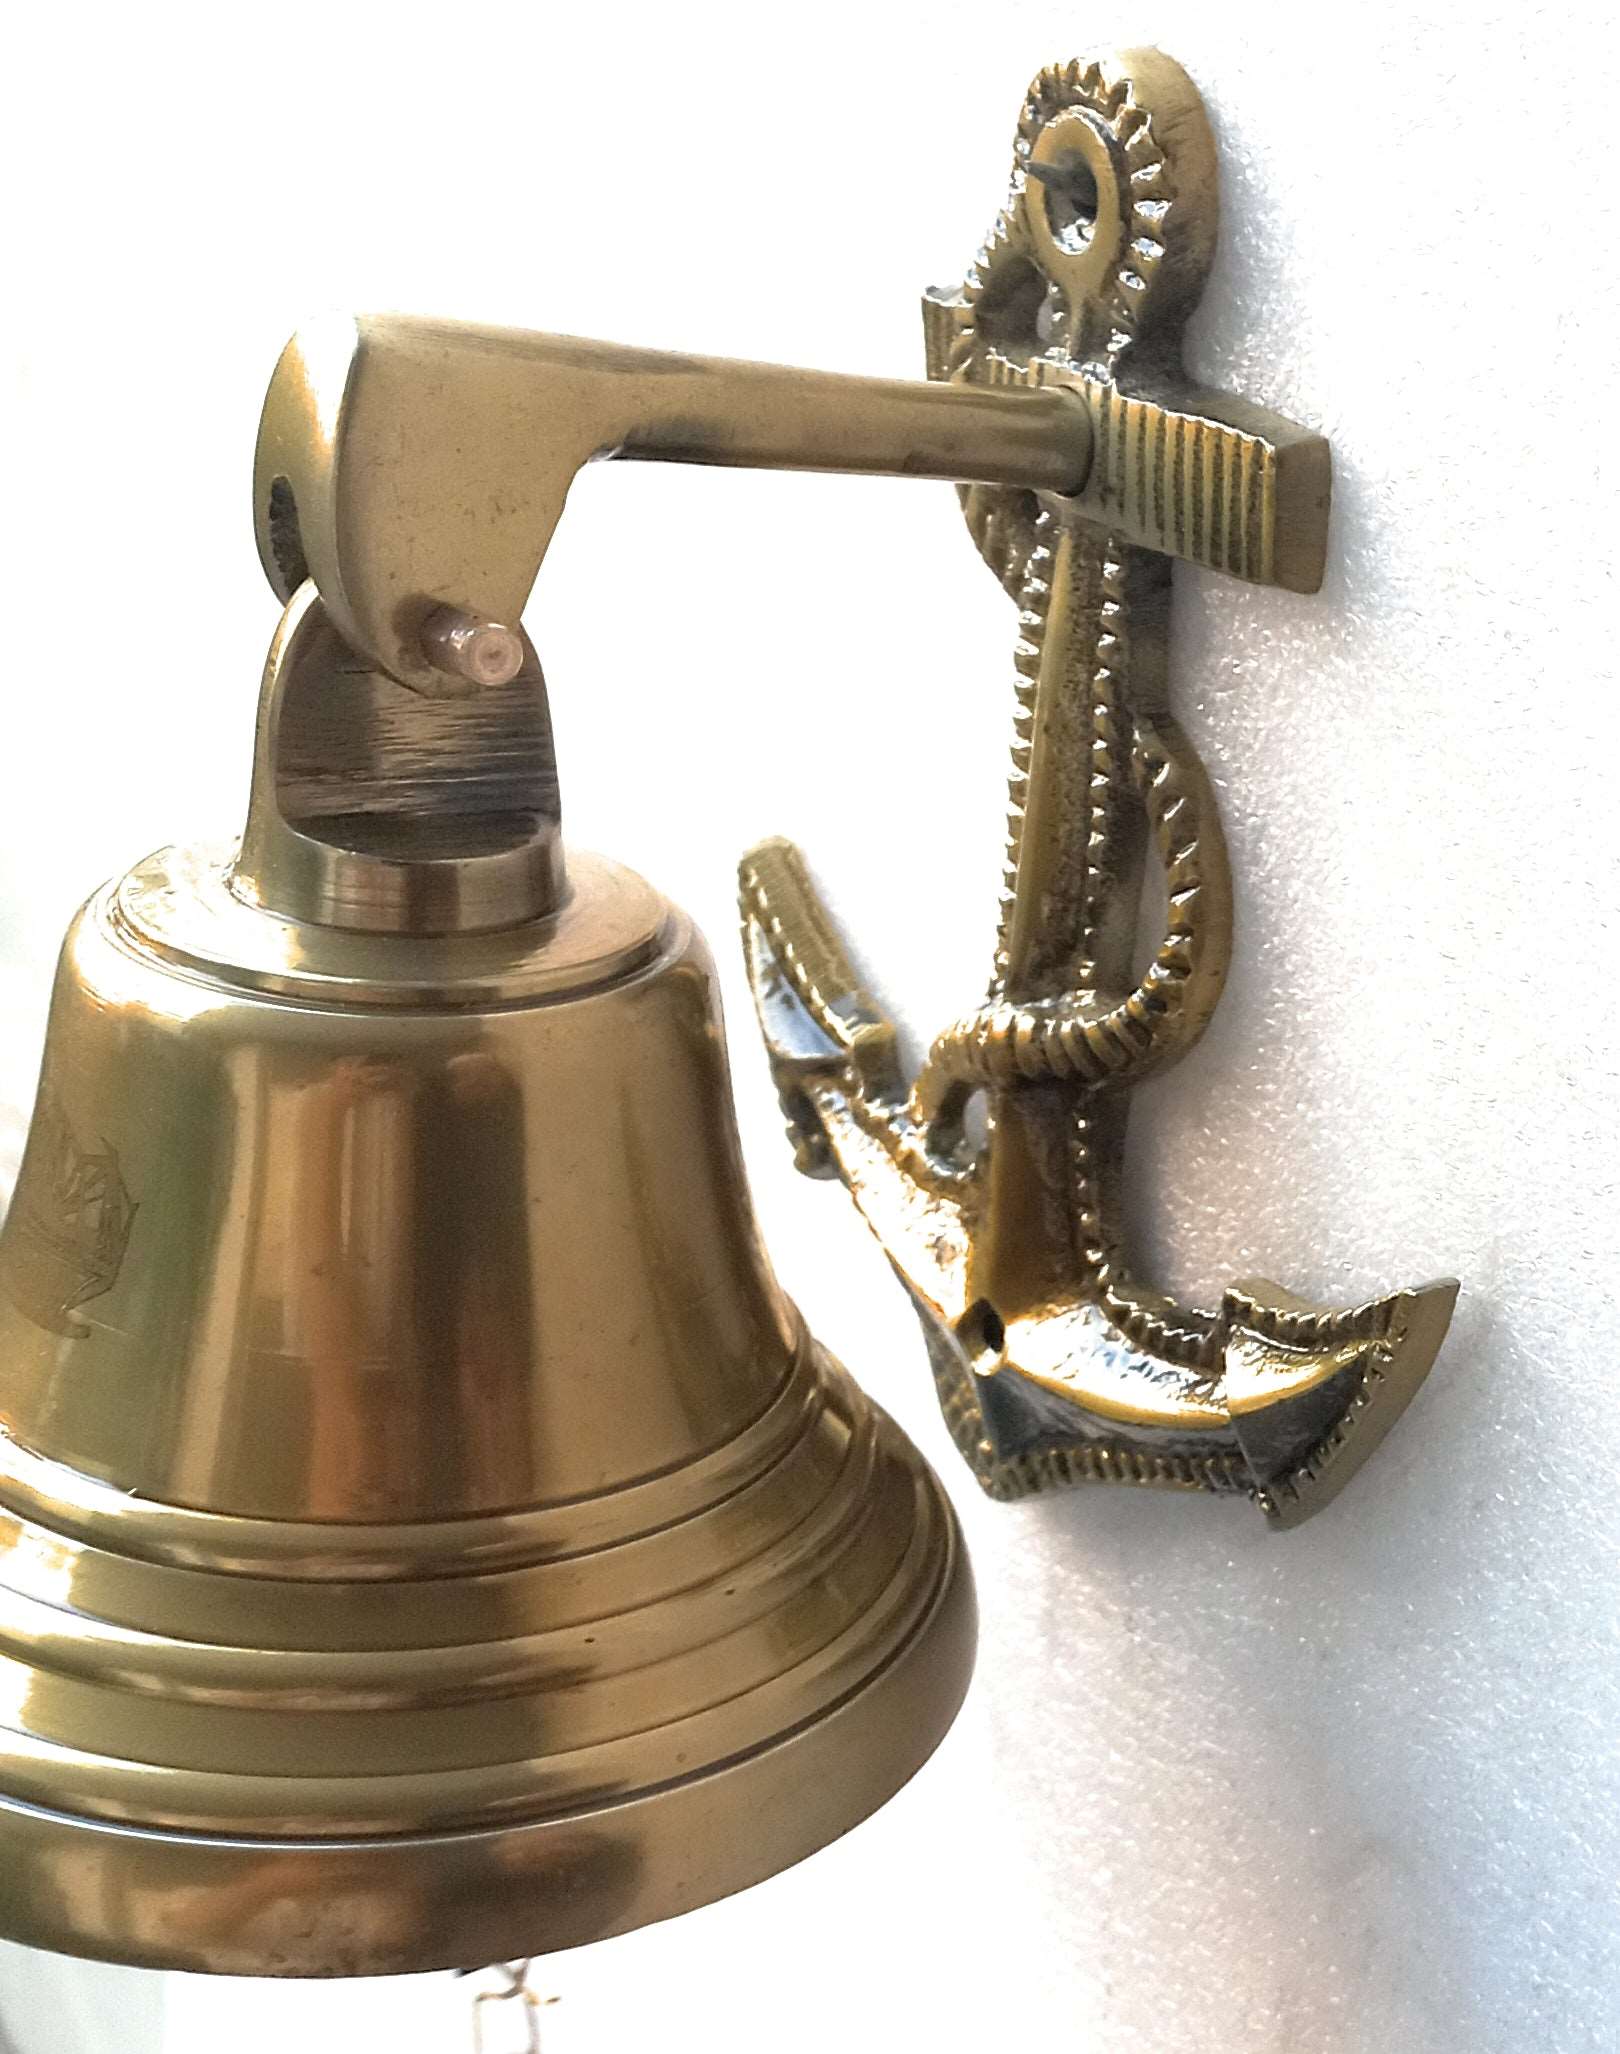 Wholesale Antique Seaworn Bronze Cast Iron Hanging Ship's Bell 6in